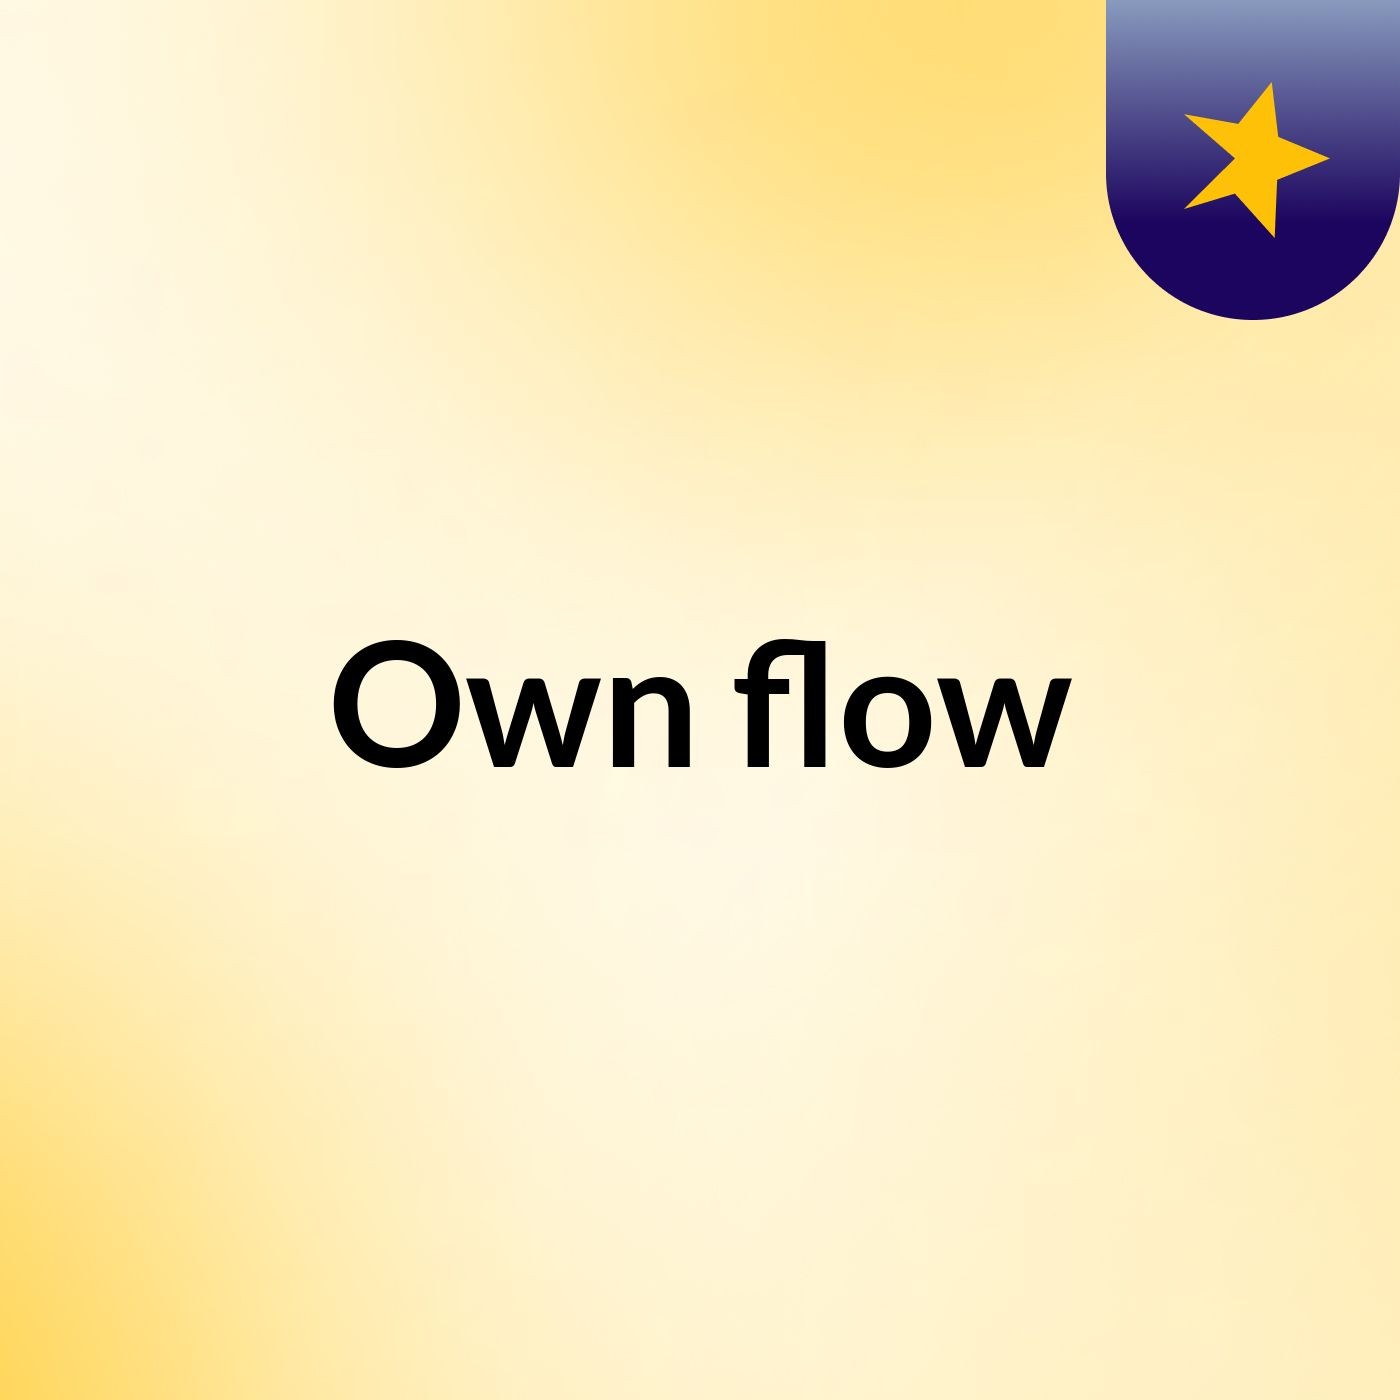 Own flow